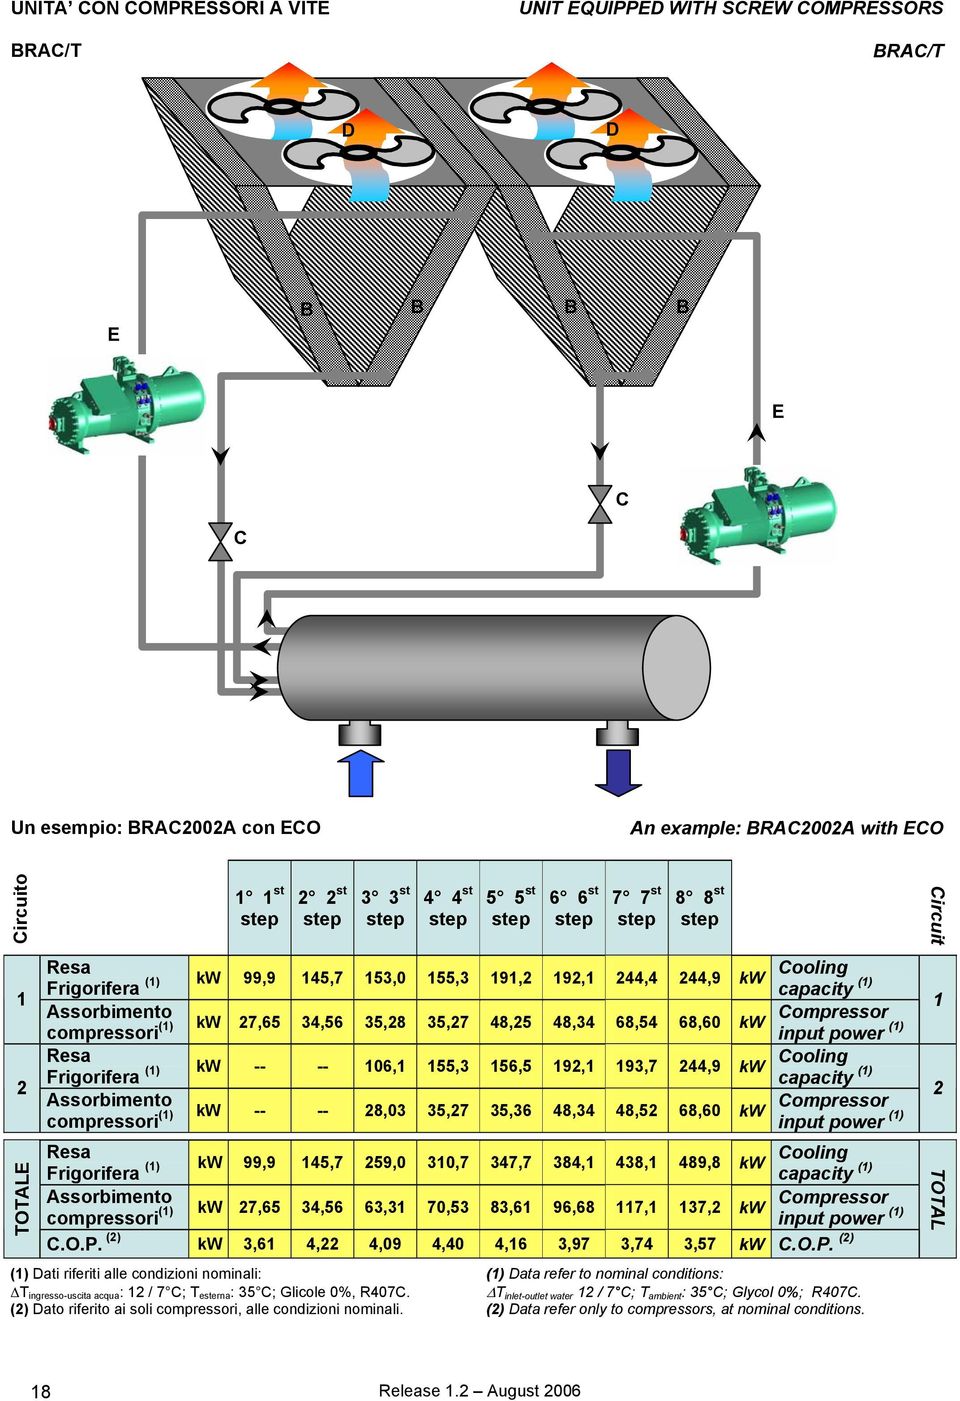 compressori (1) kw 27,65 34,56 35,28 35,27 48,25 48,34 68,54 68,60 kw Compressor input power (1) 1 Resa Frigorifera (1) kw -- -- 106,1 155,3 156,5 192,1 193,7 244,9 kw Cooling capacity (1)